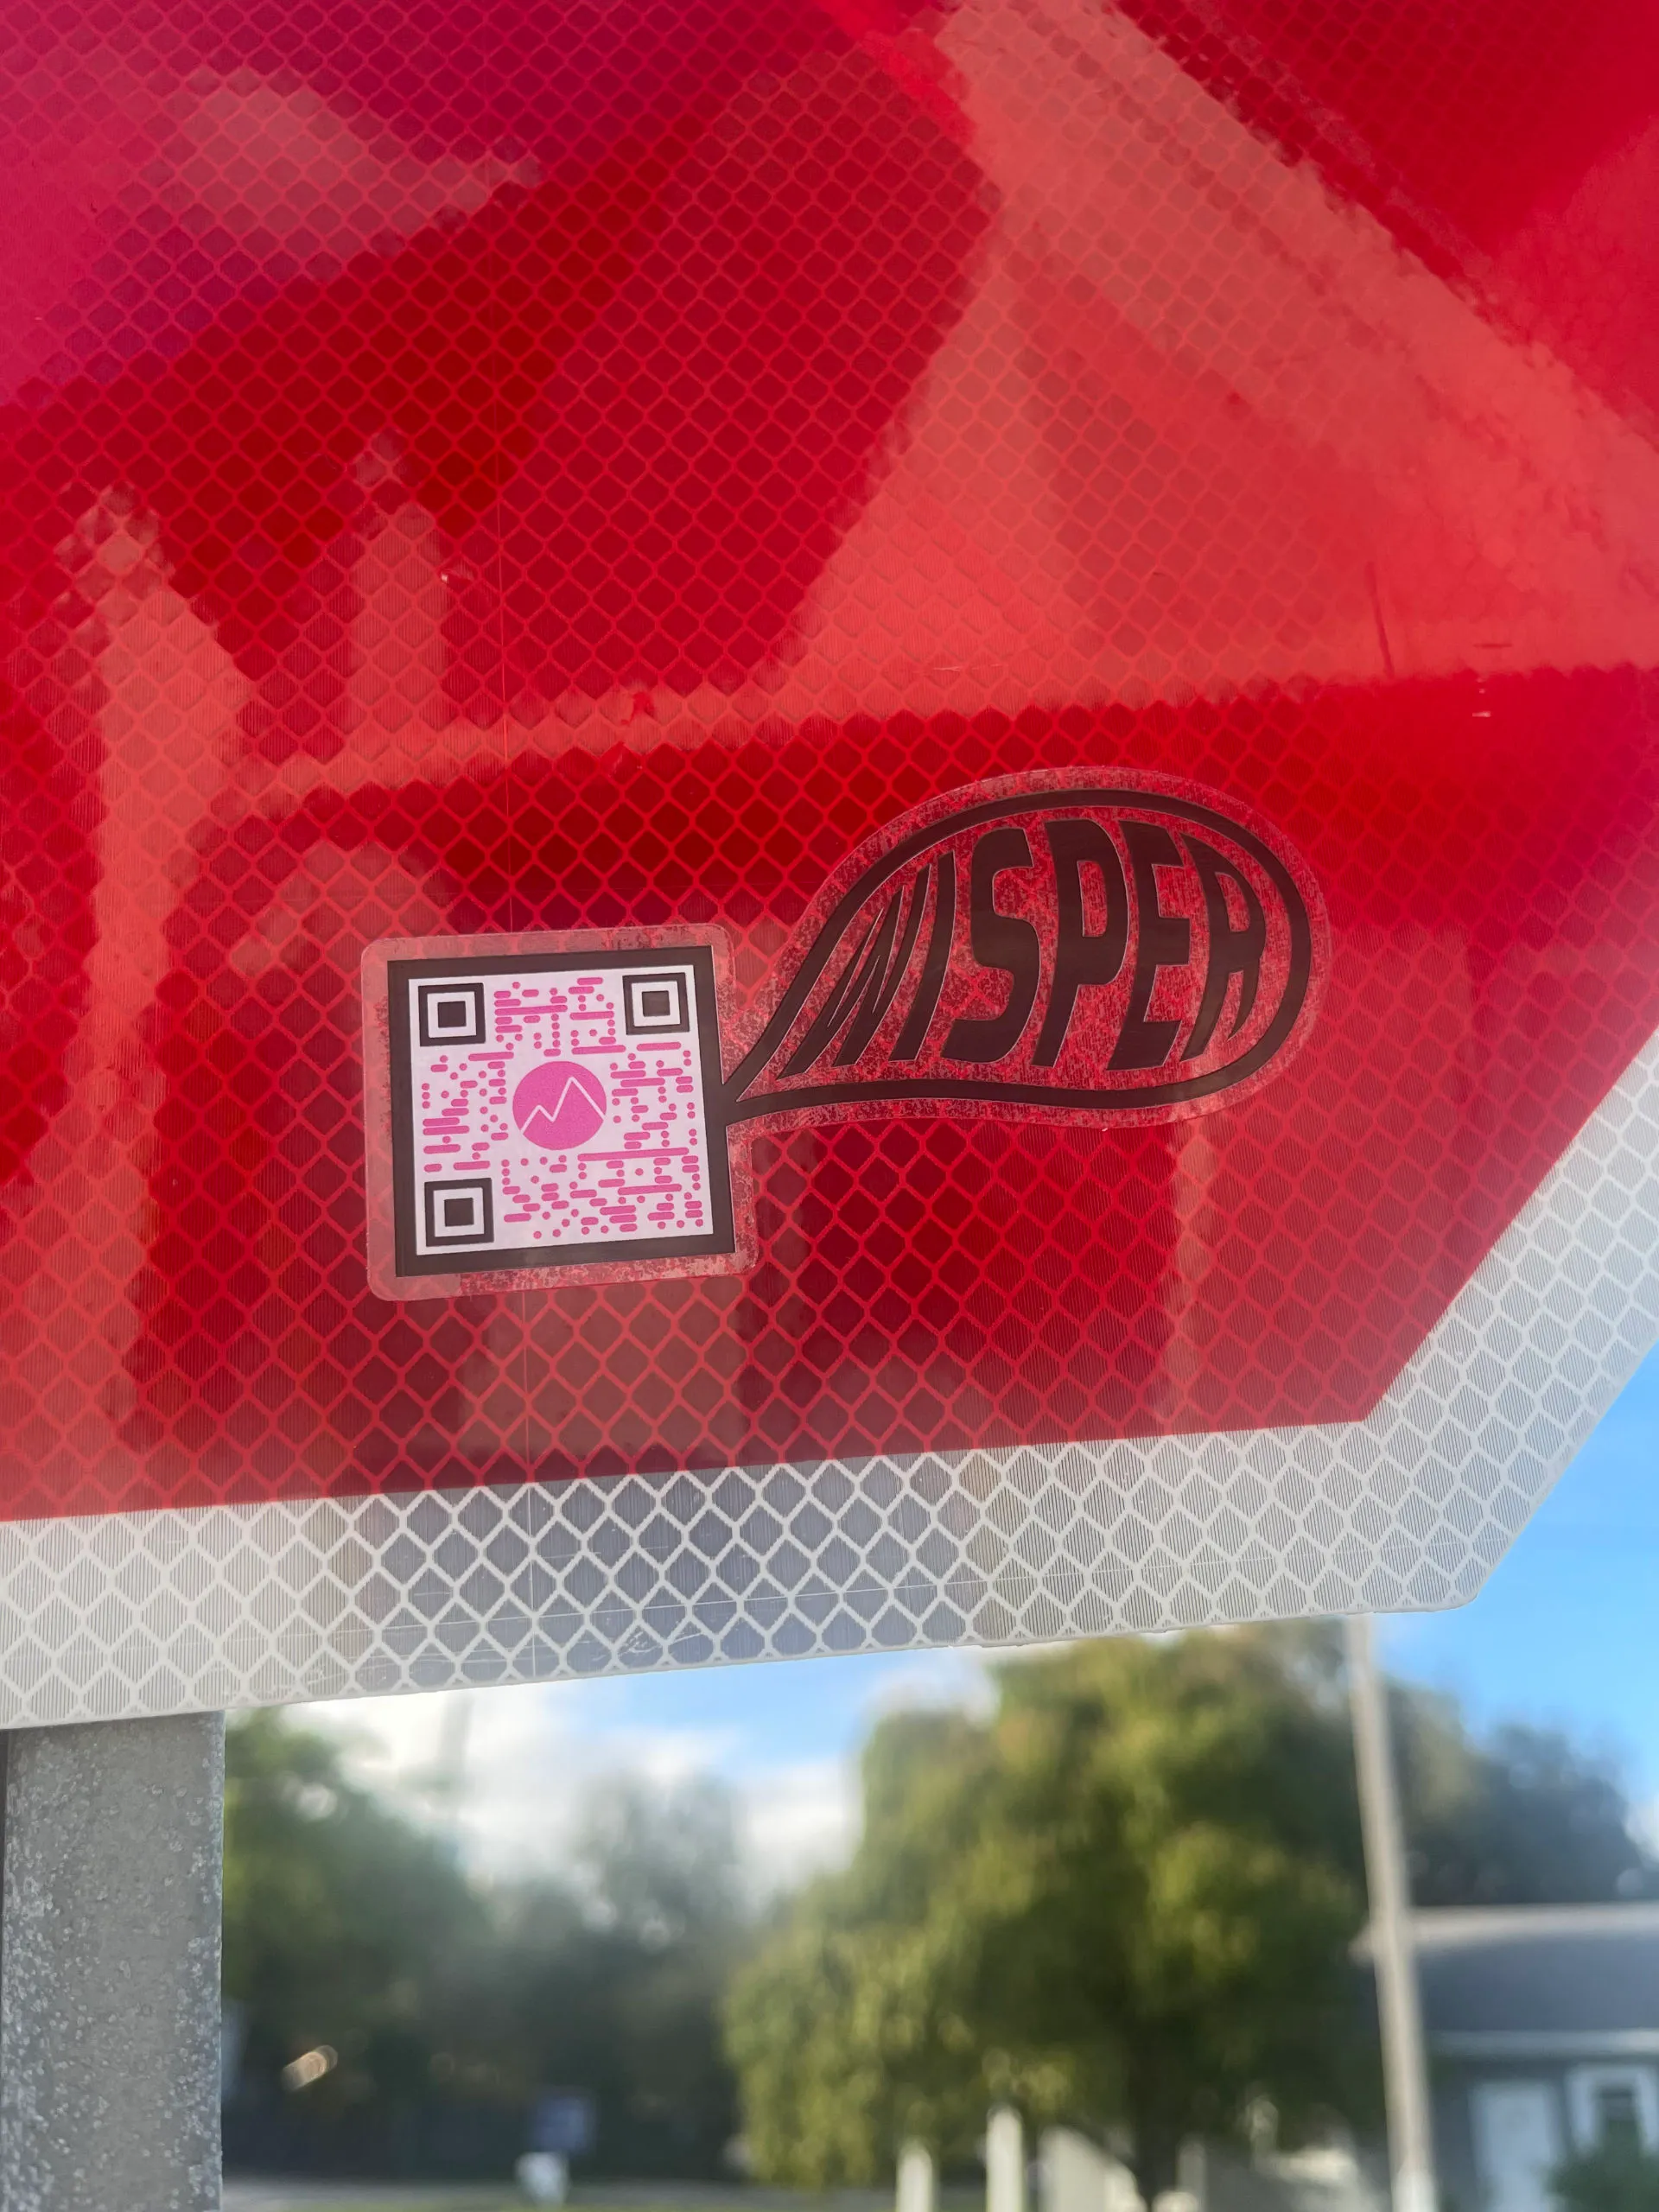 Wisper sticket on a red signal